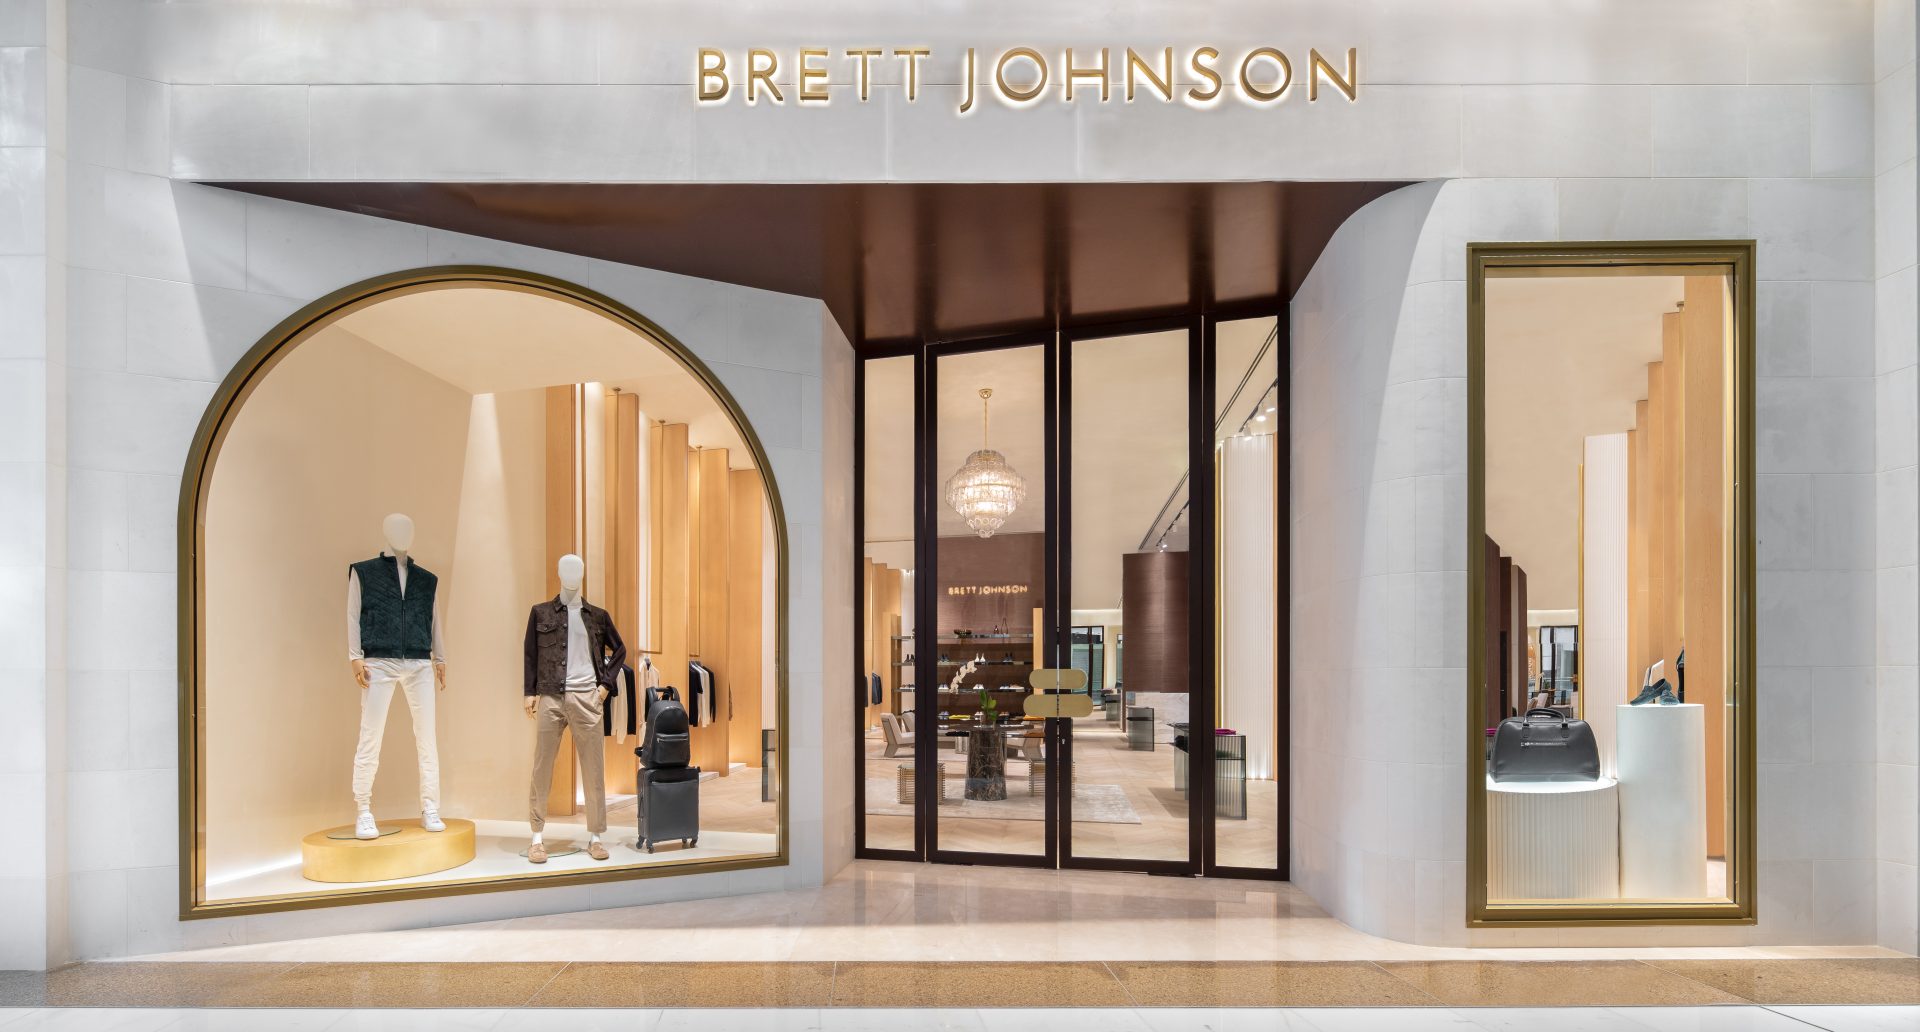 Deniz Galip Studio creates a chic modern store for Brett Johnson at The ...